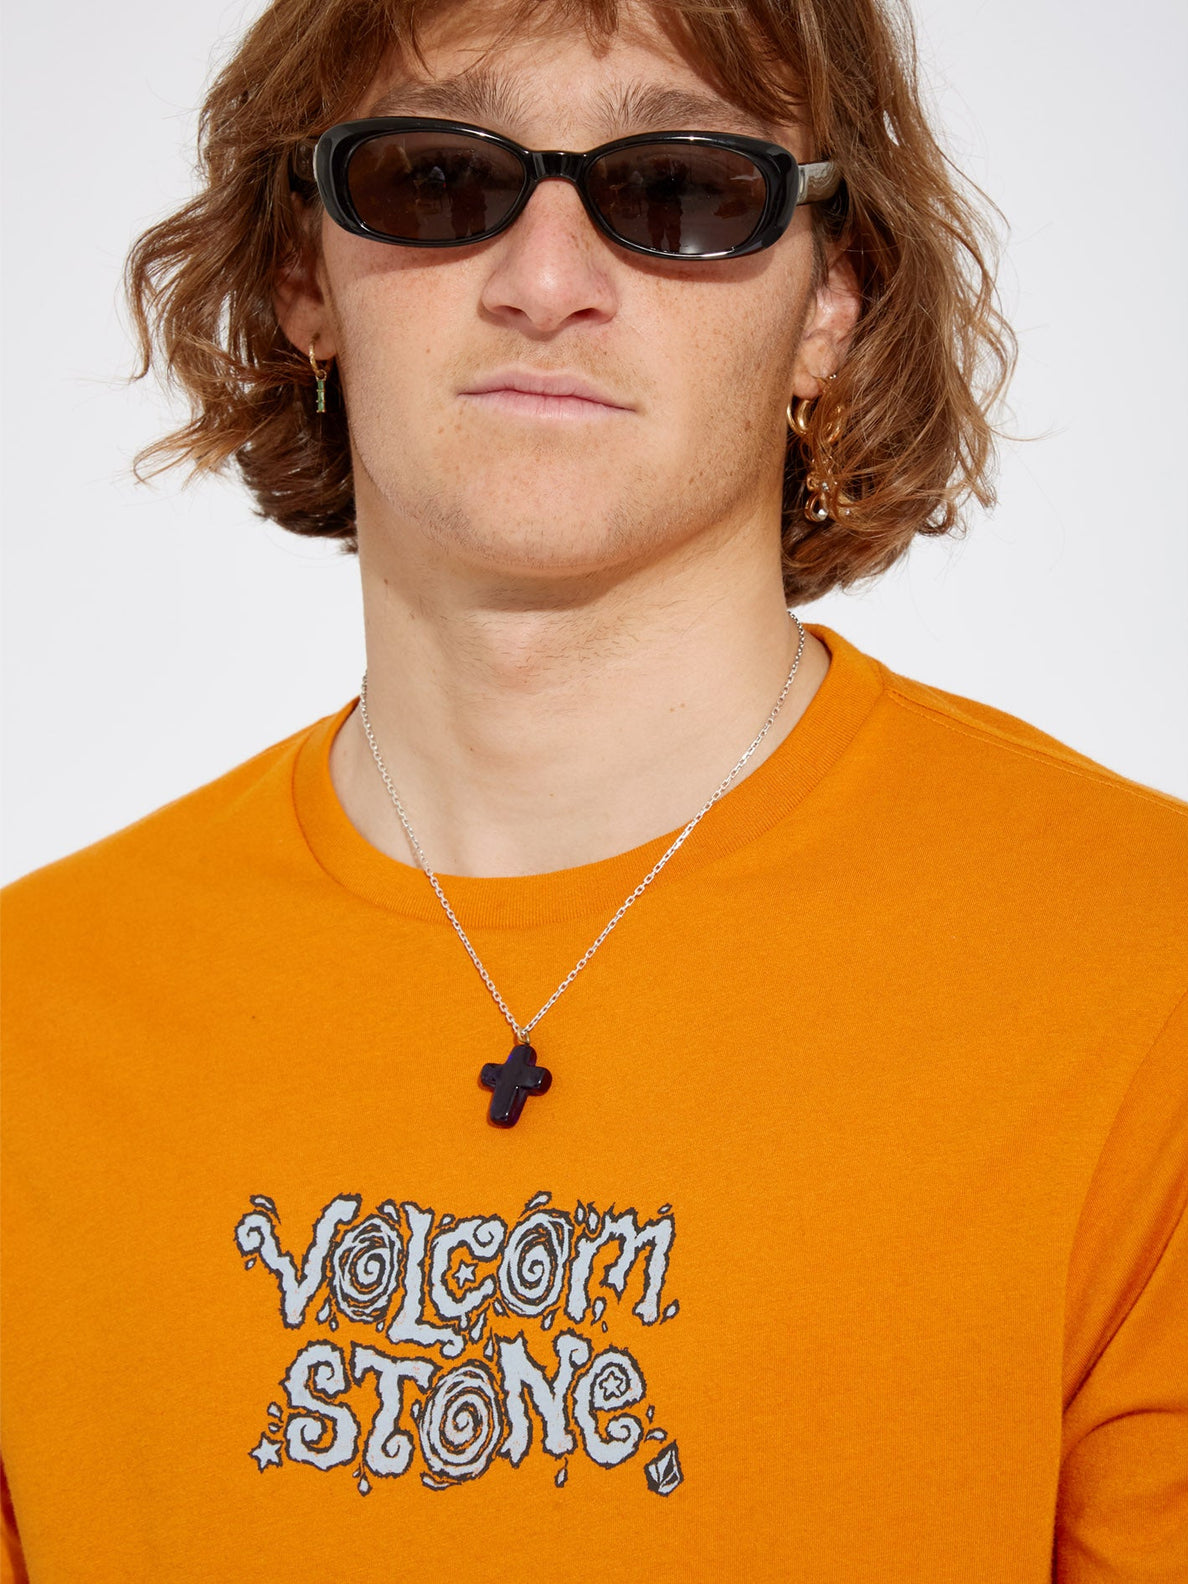 Camiseta Volcom Justin Hager In Type SS - Saffron | Camisetas de hombre | Camisetas manga corta de hombre | Volcom Shop | surfdevils.com